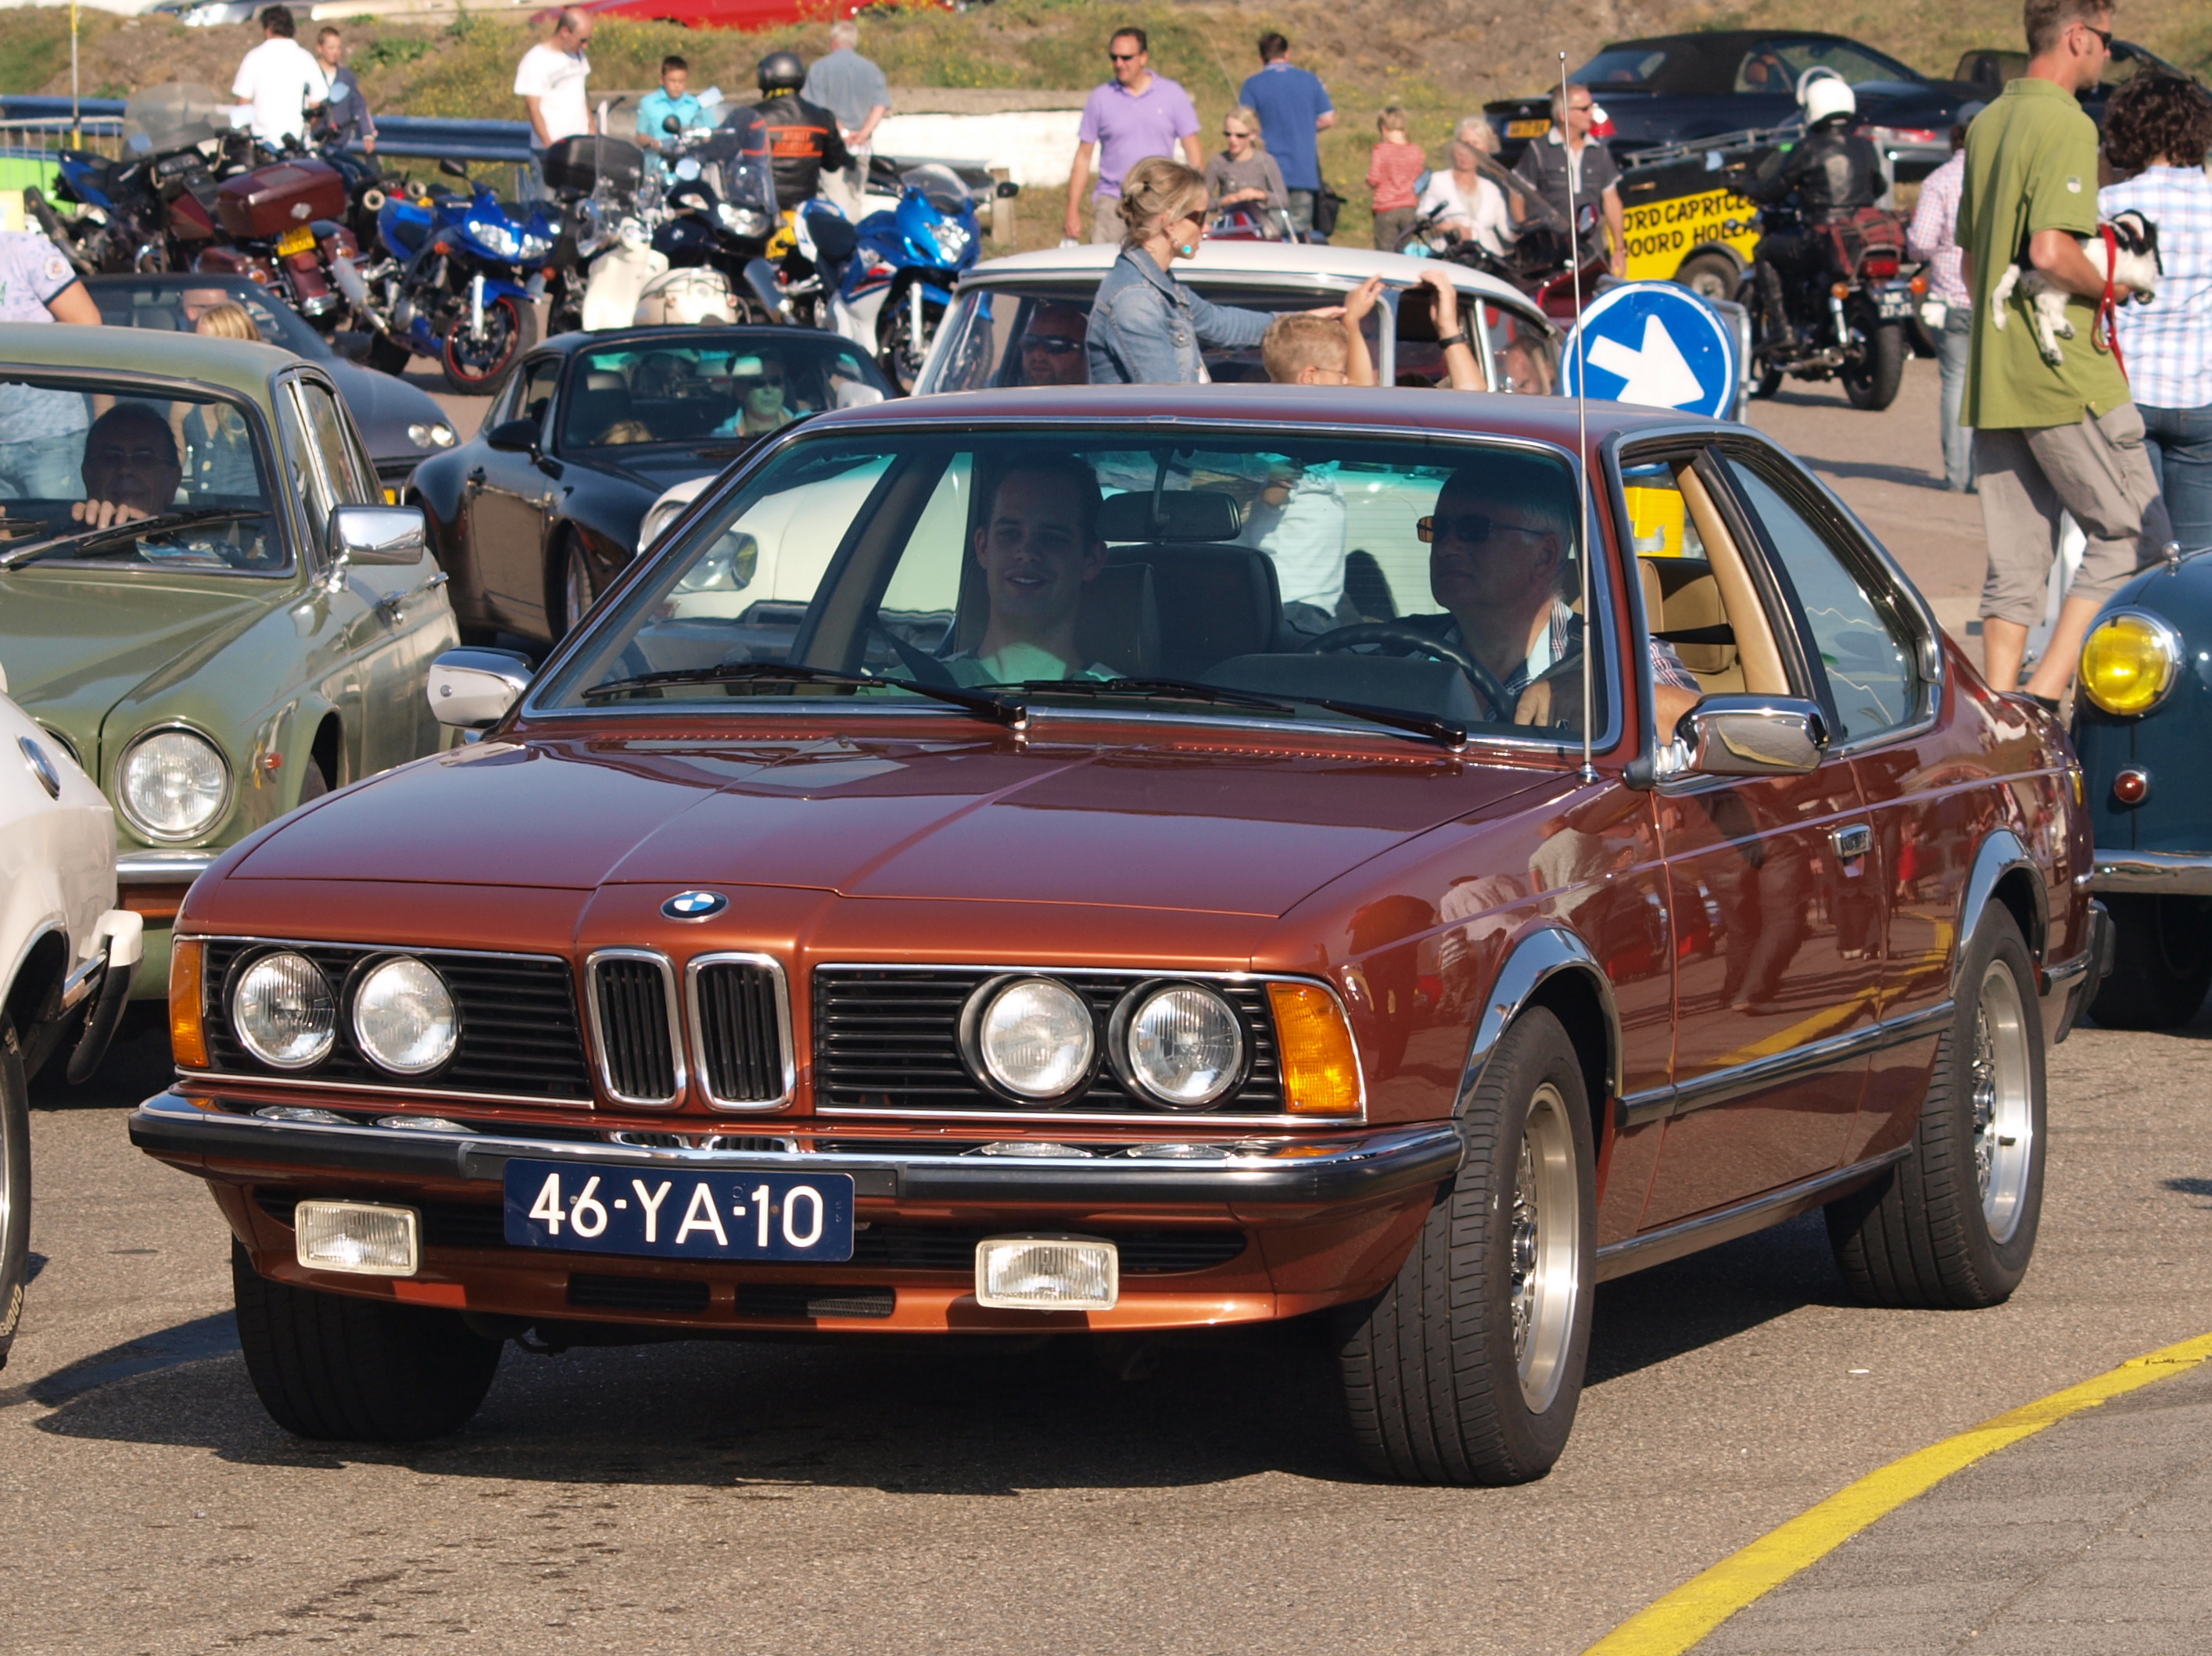 File:BMW 630 CS AUTOMATIC dutch licence registration 46-YA-10 pic2.